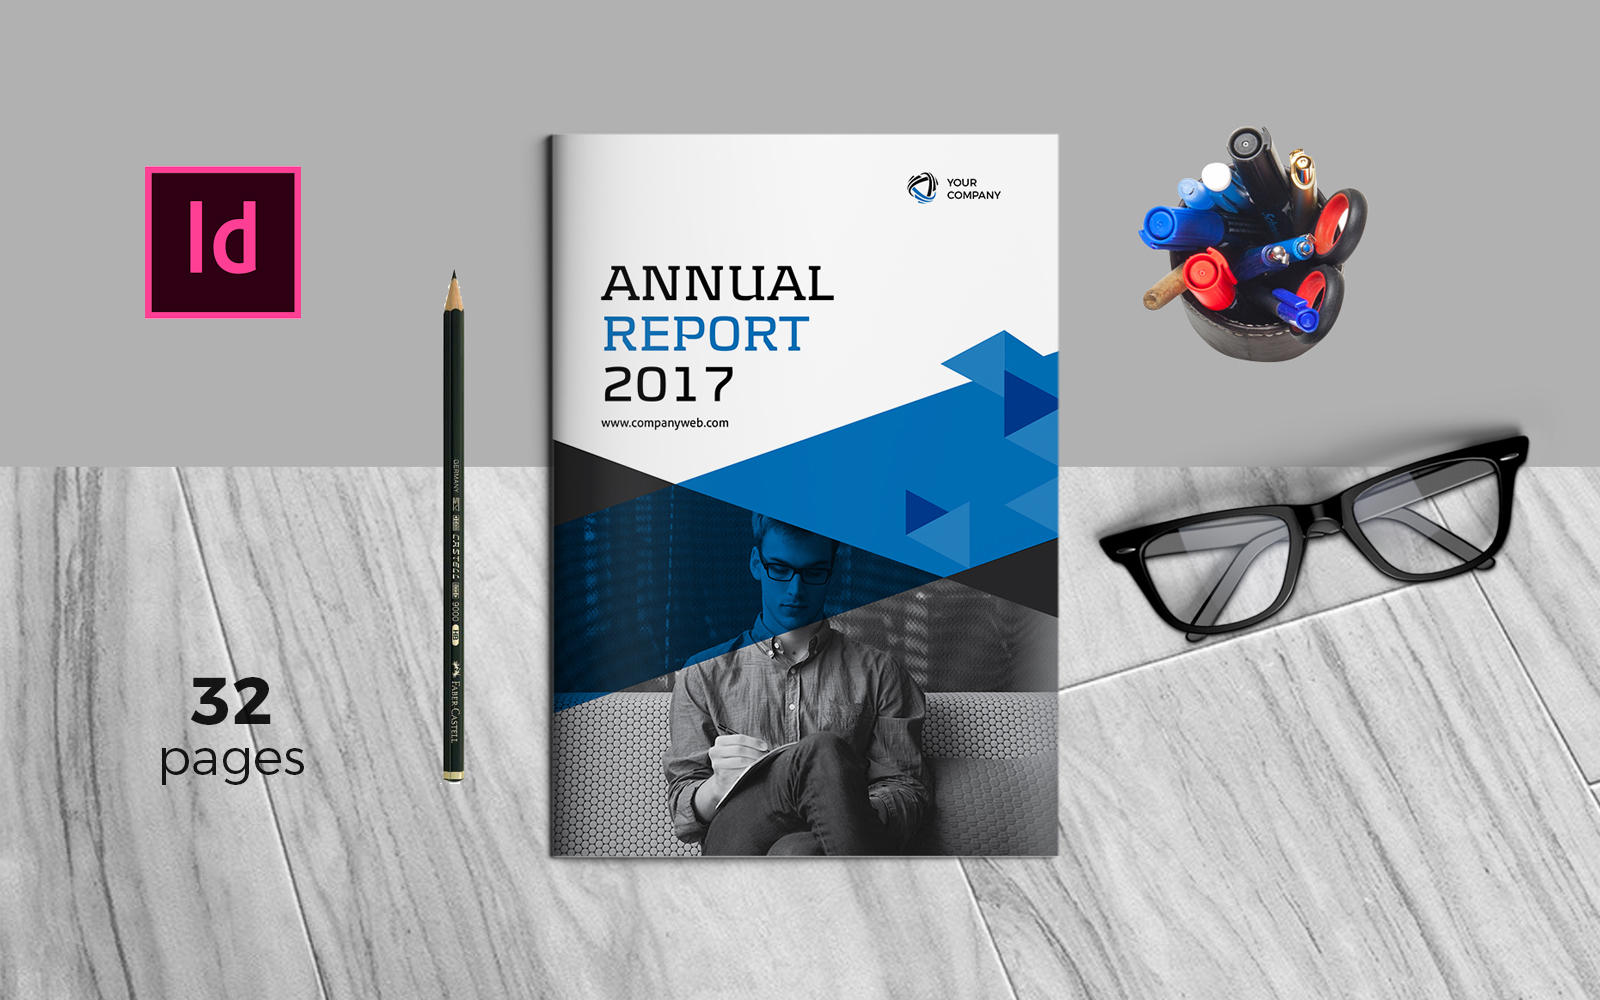 Annual Report - Corporate Identity Template